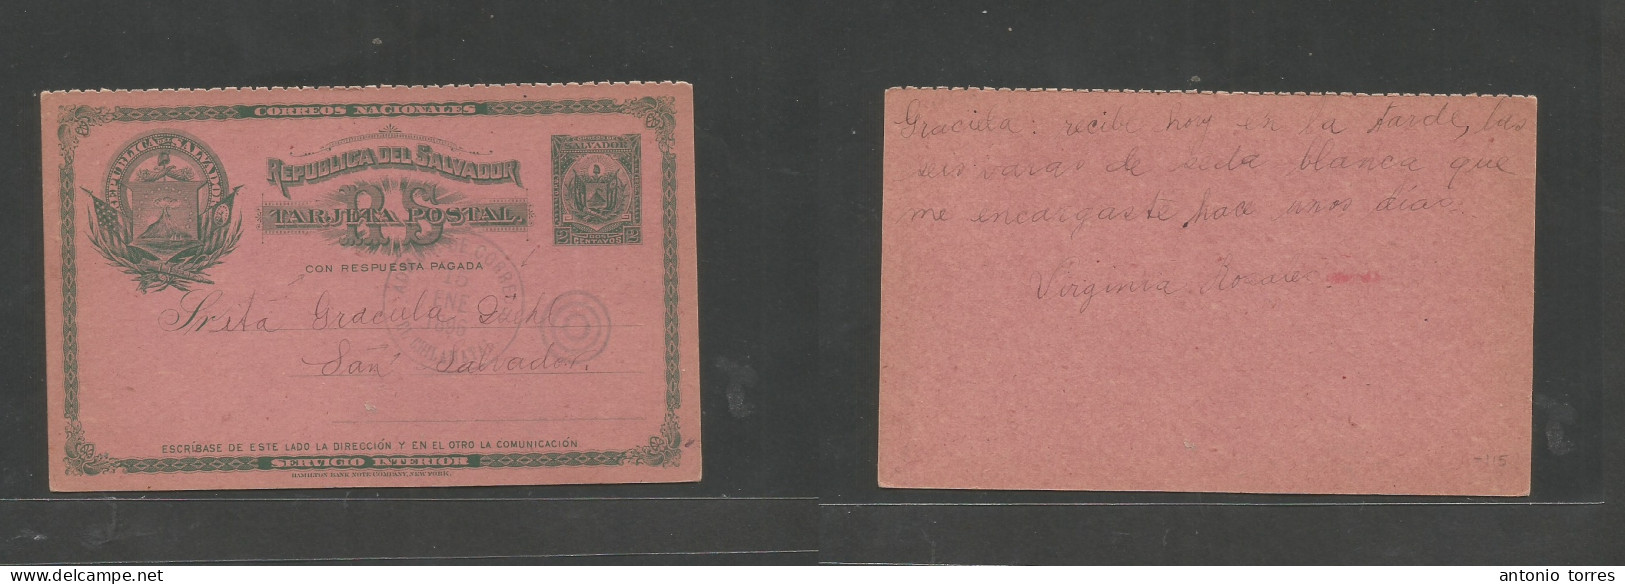 Salvador, El. 1895 (15 En) El Chilamatal - San Salvador. Doble 2c Green / Pink Stationary Card, Halfway Out, Depart Cds. - Salvador